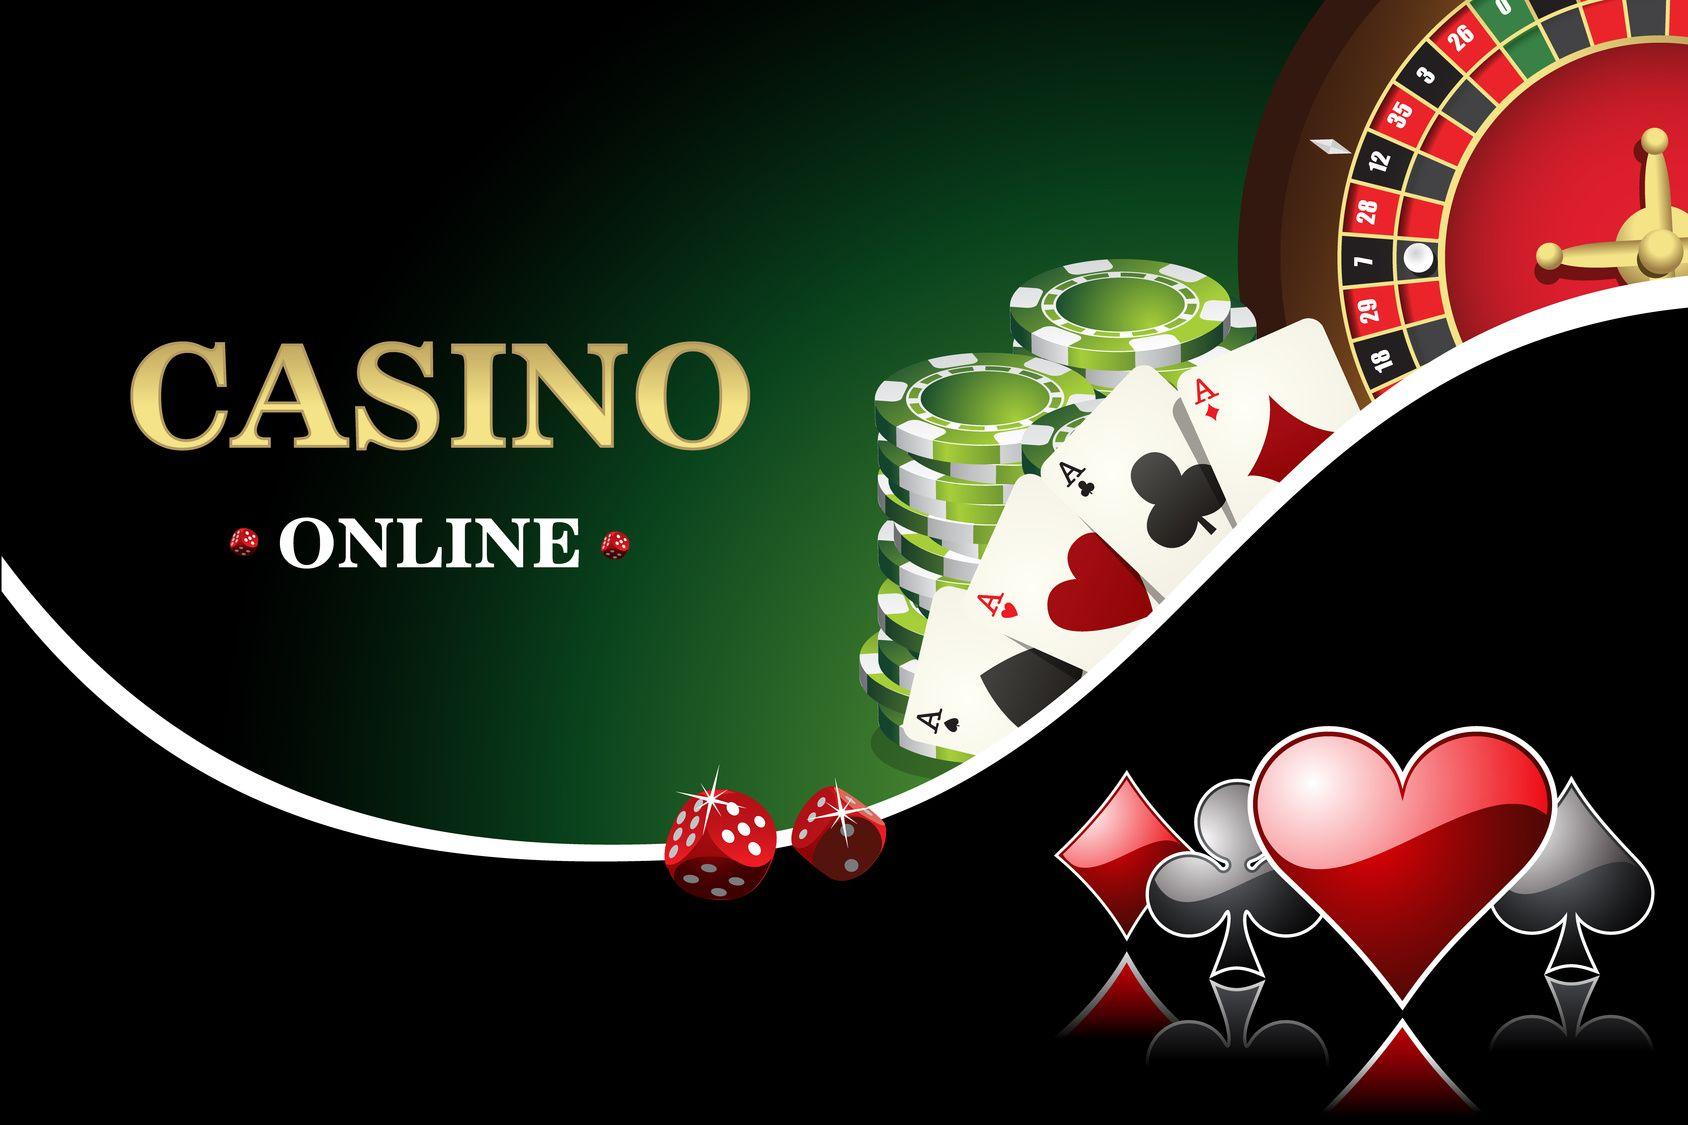 Casino Logo - How to Design Casino Logos that Radiate Good Luck • Online Logo ...